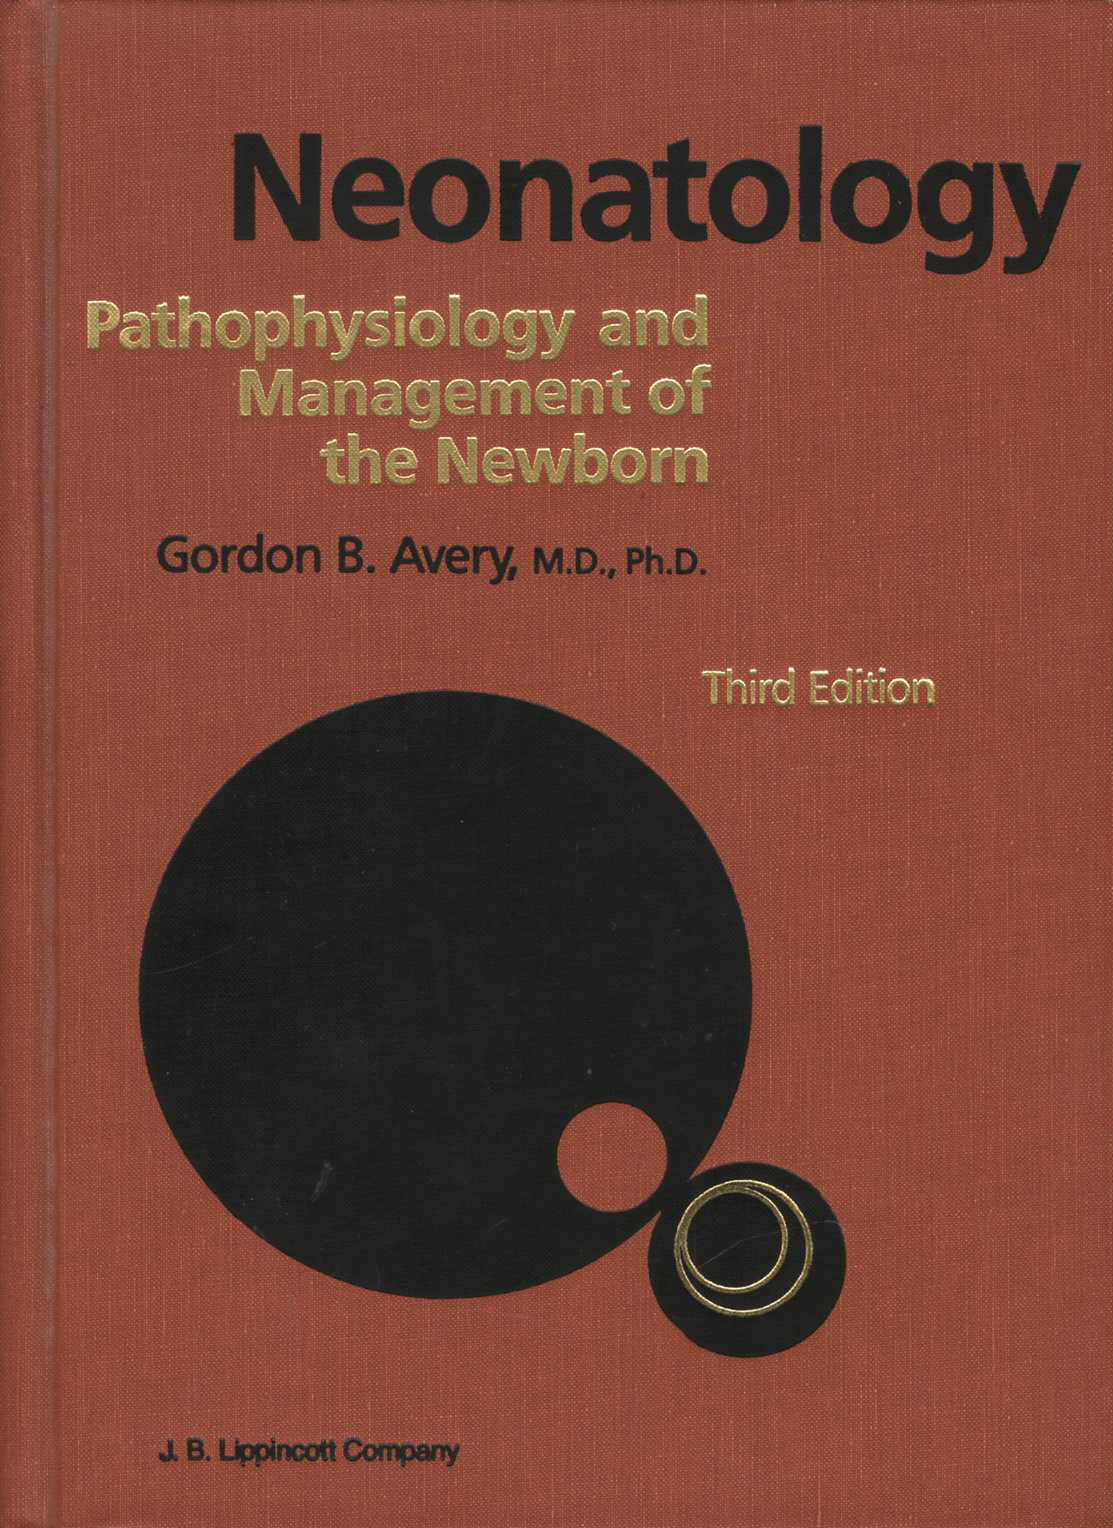 Neonatology (Gordon B. Avery)